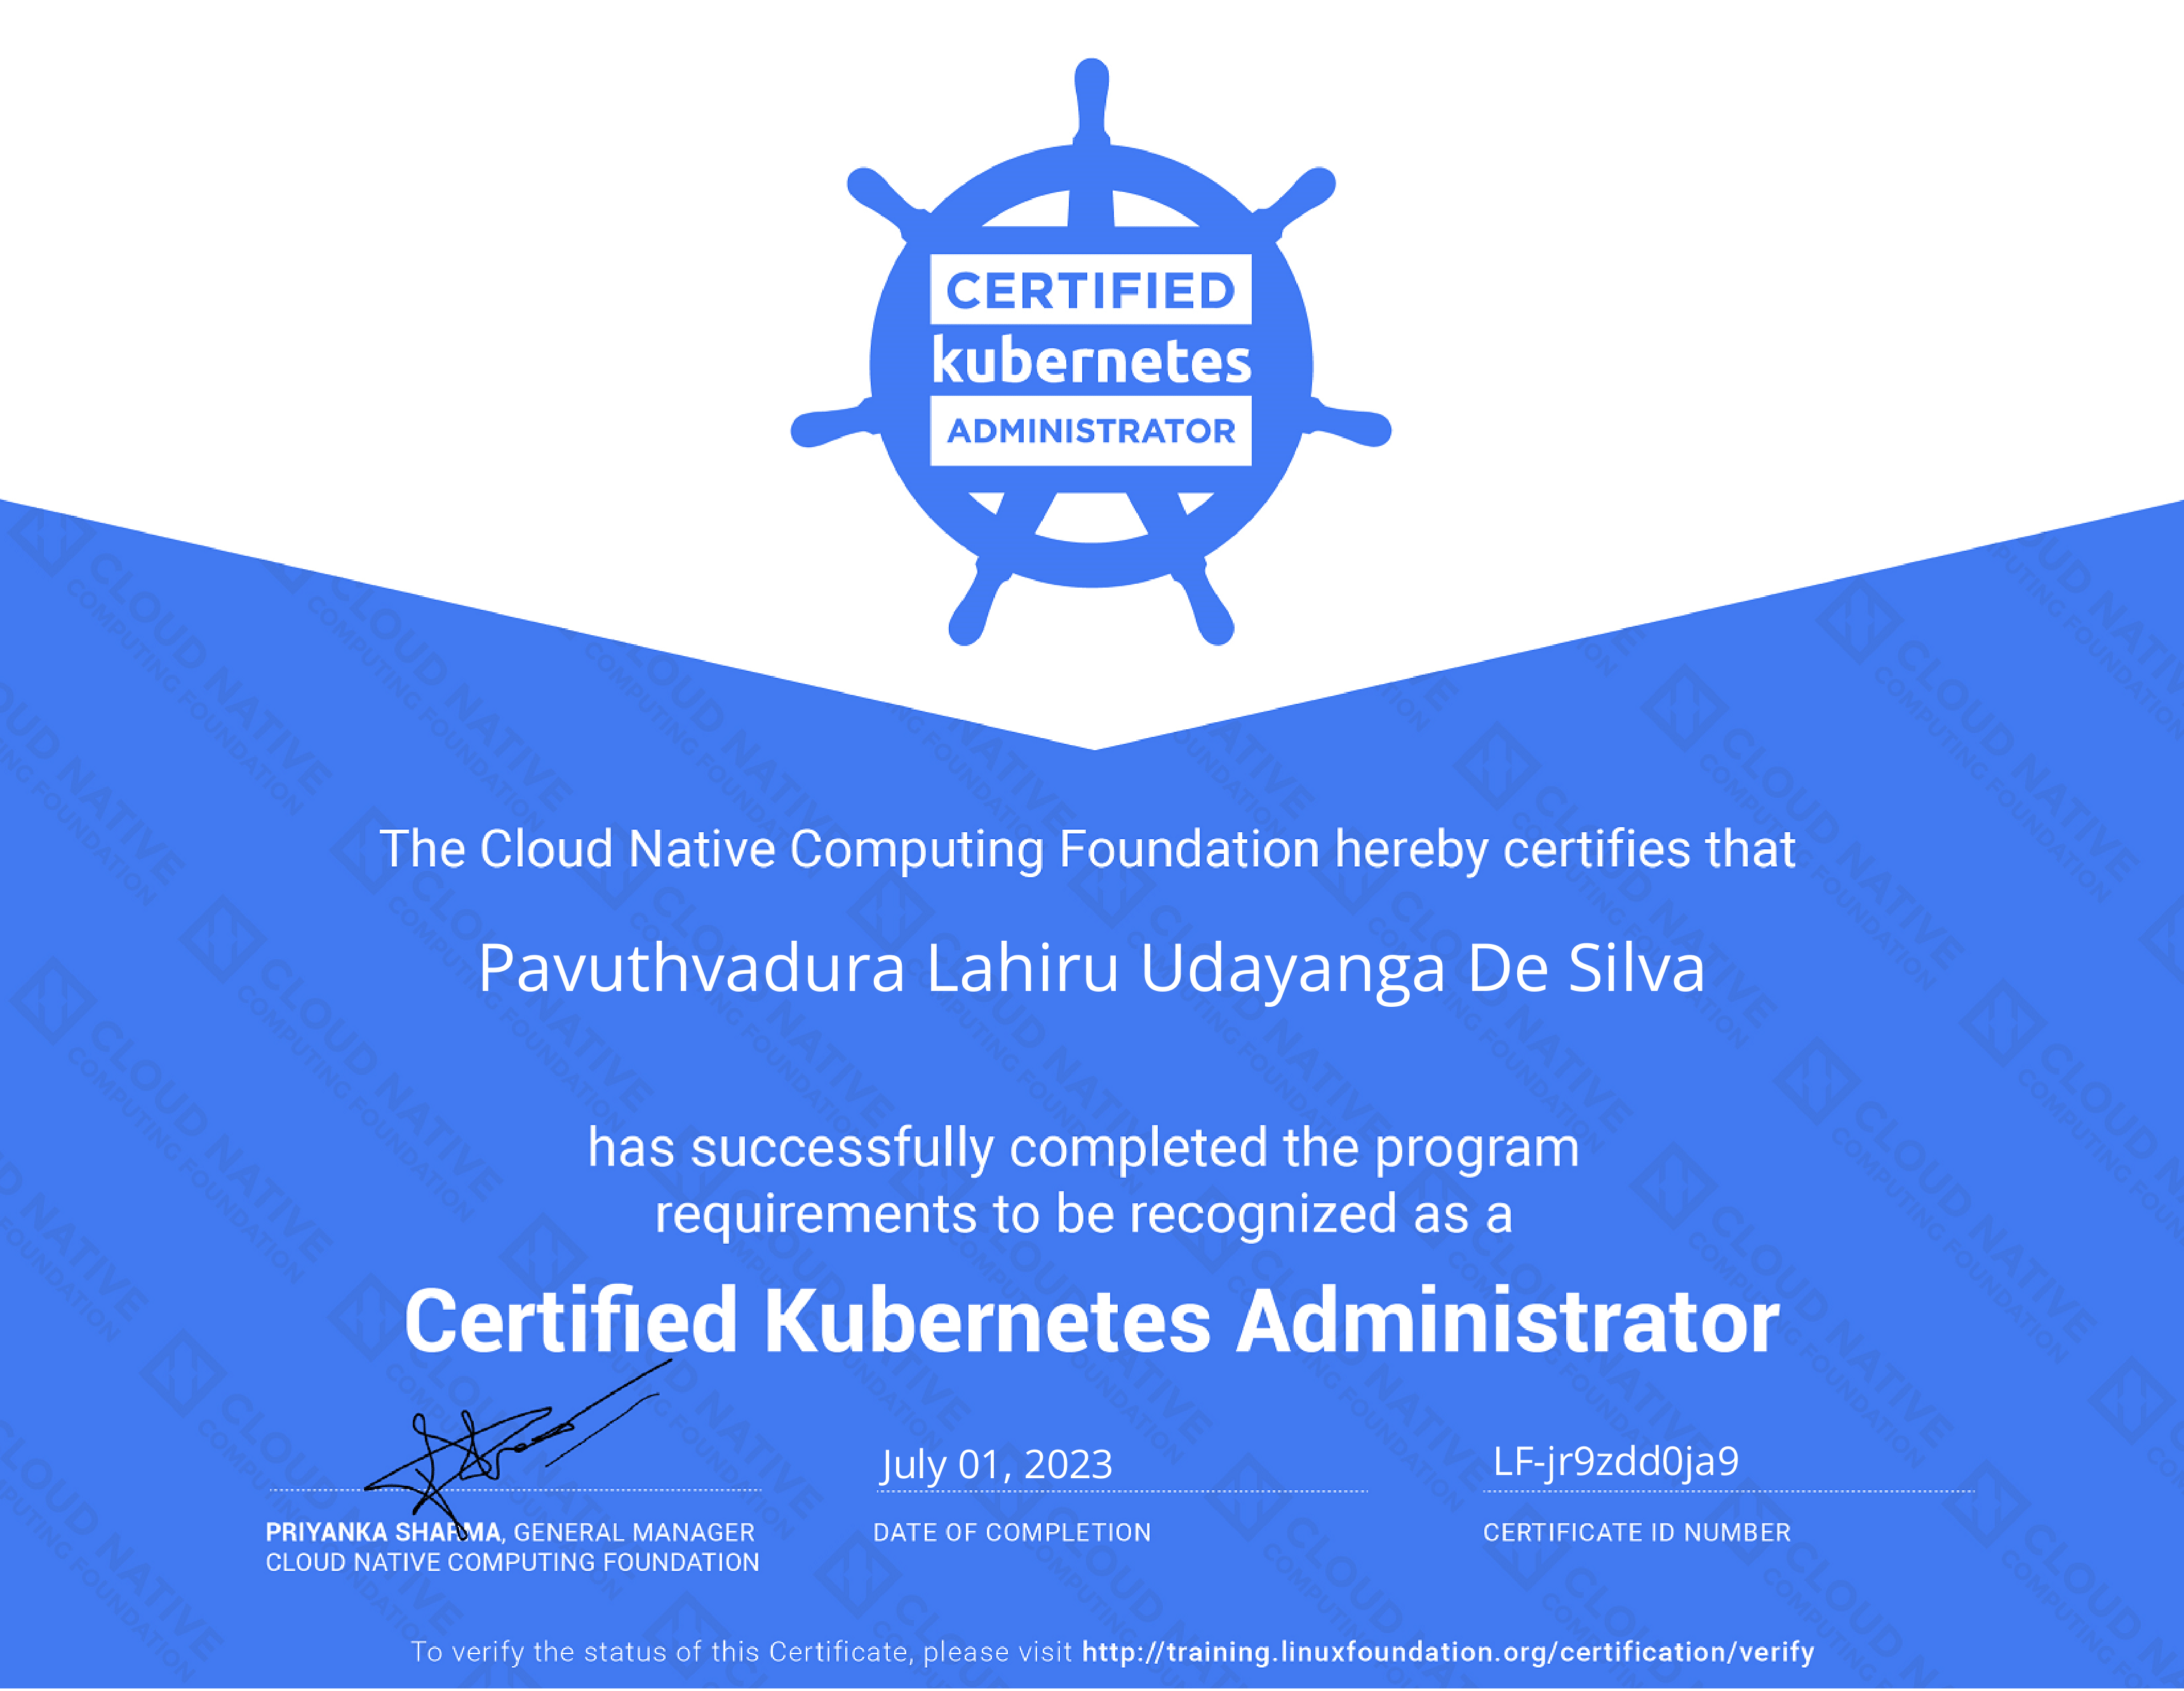 My CKA certificate